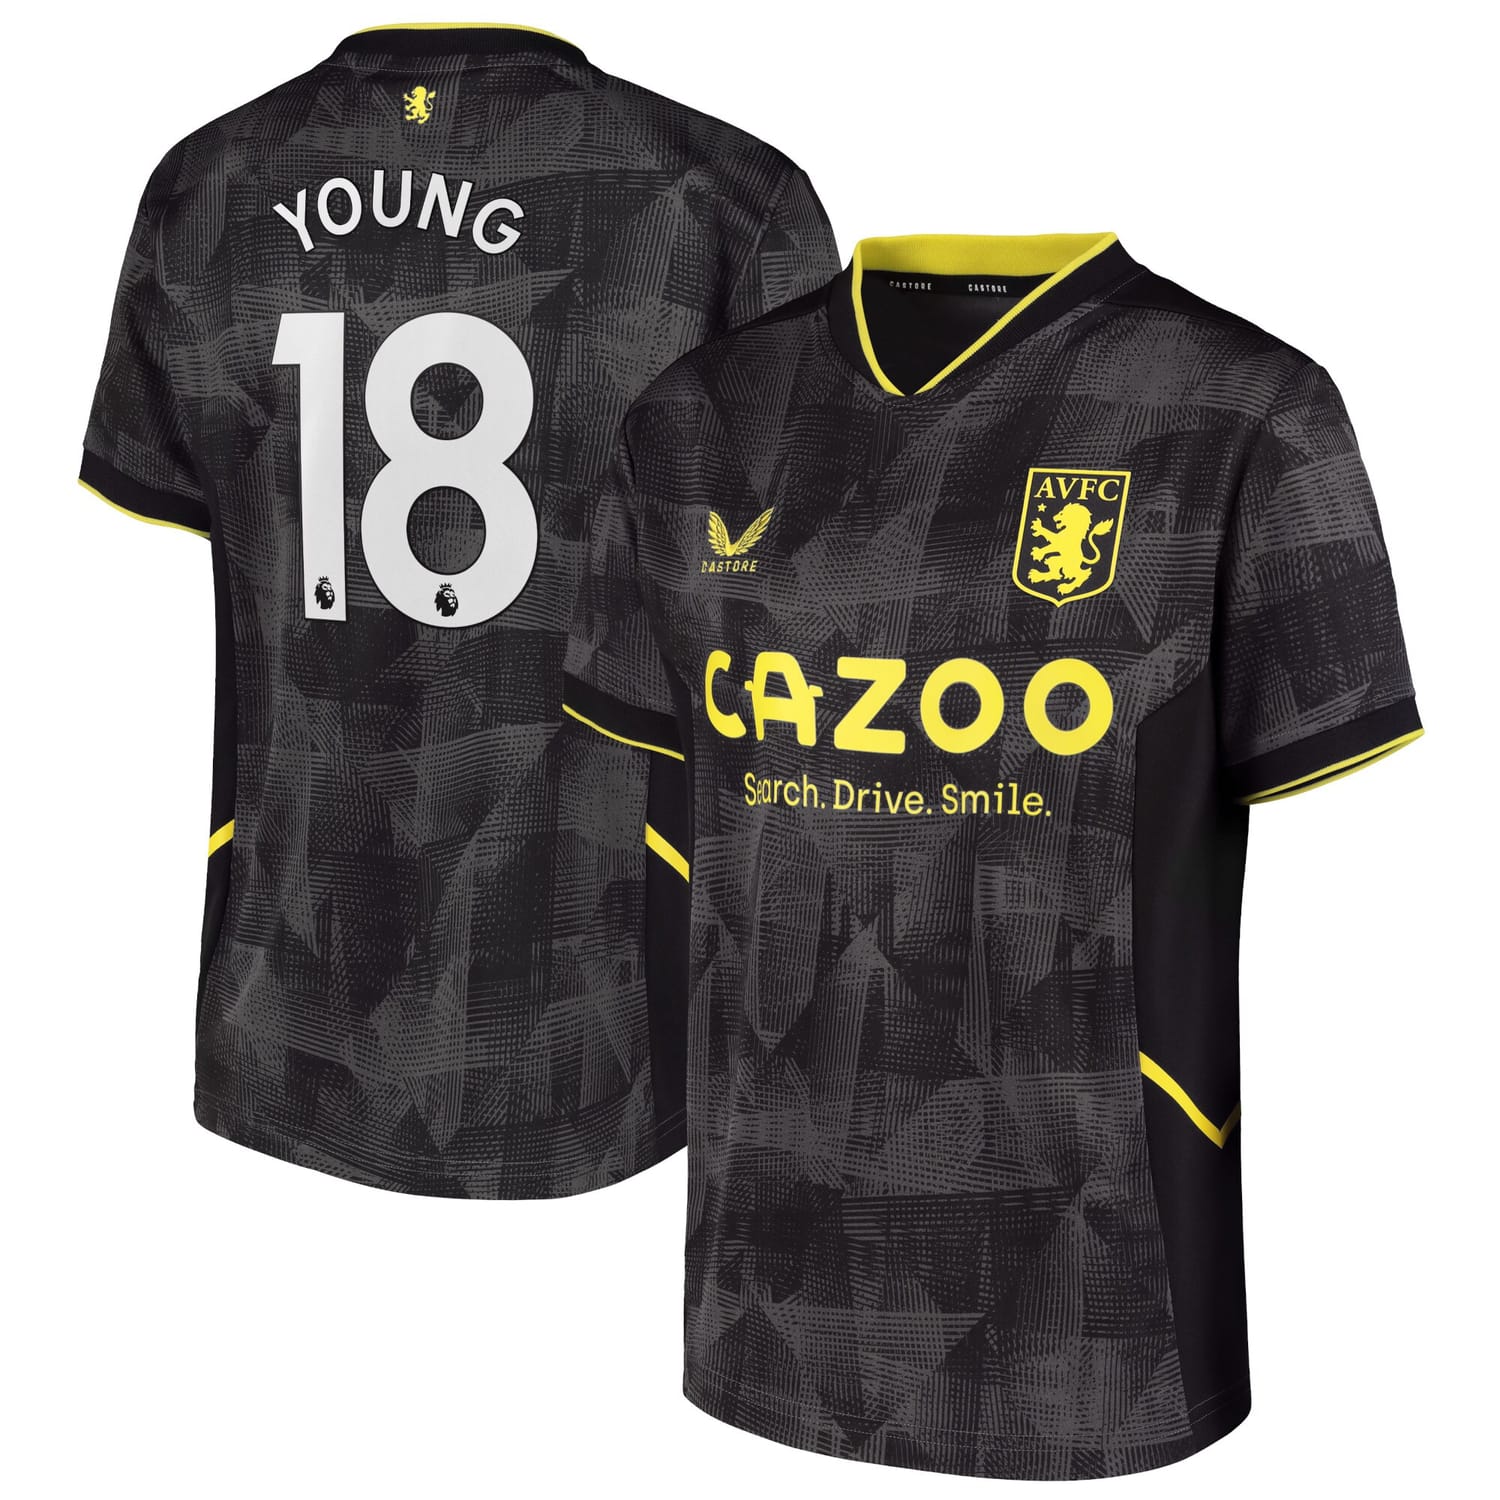 Premier League Aston Villa Third Jersey Shirt 2022-23 player Ashley Young 18 printing for Men